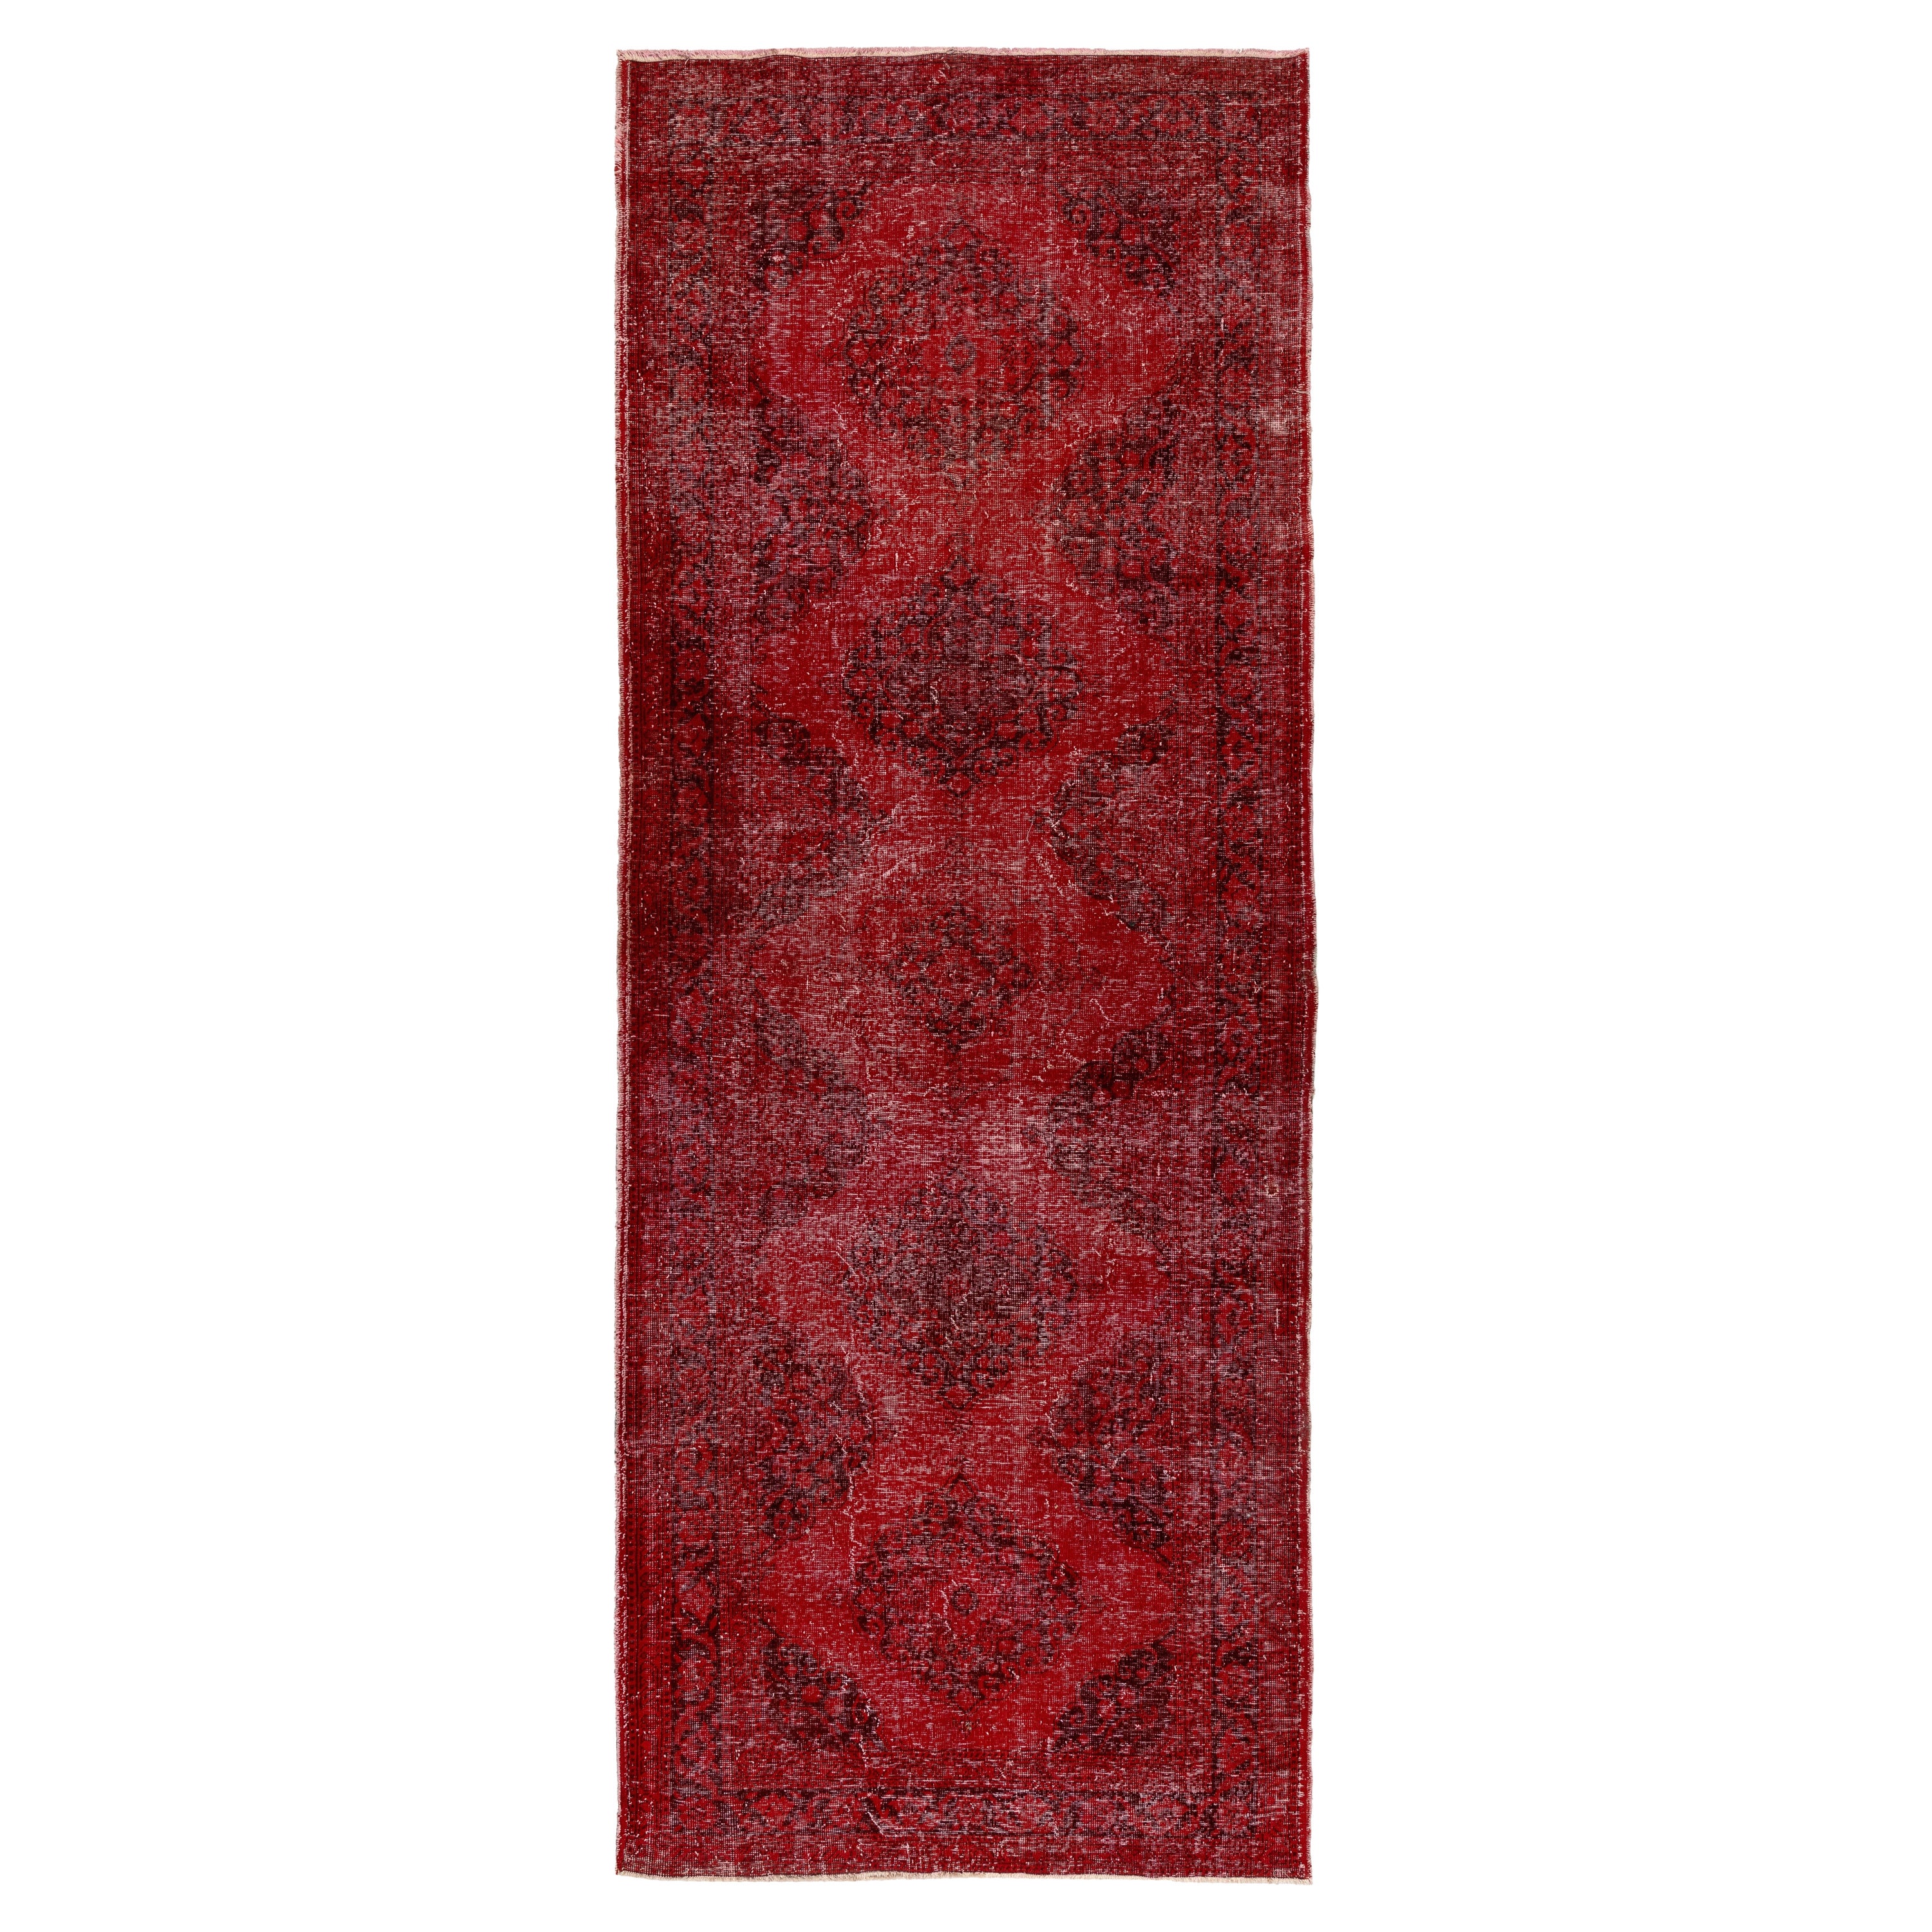 4.7x12.5 Ft Modern Handmade Vintage Turkish Runner Rug in Red for Hallway Decor For Sale